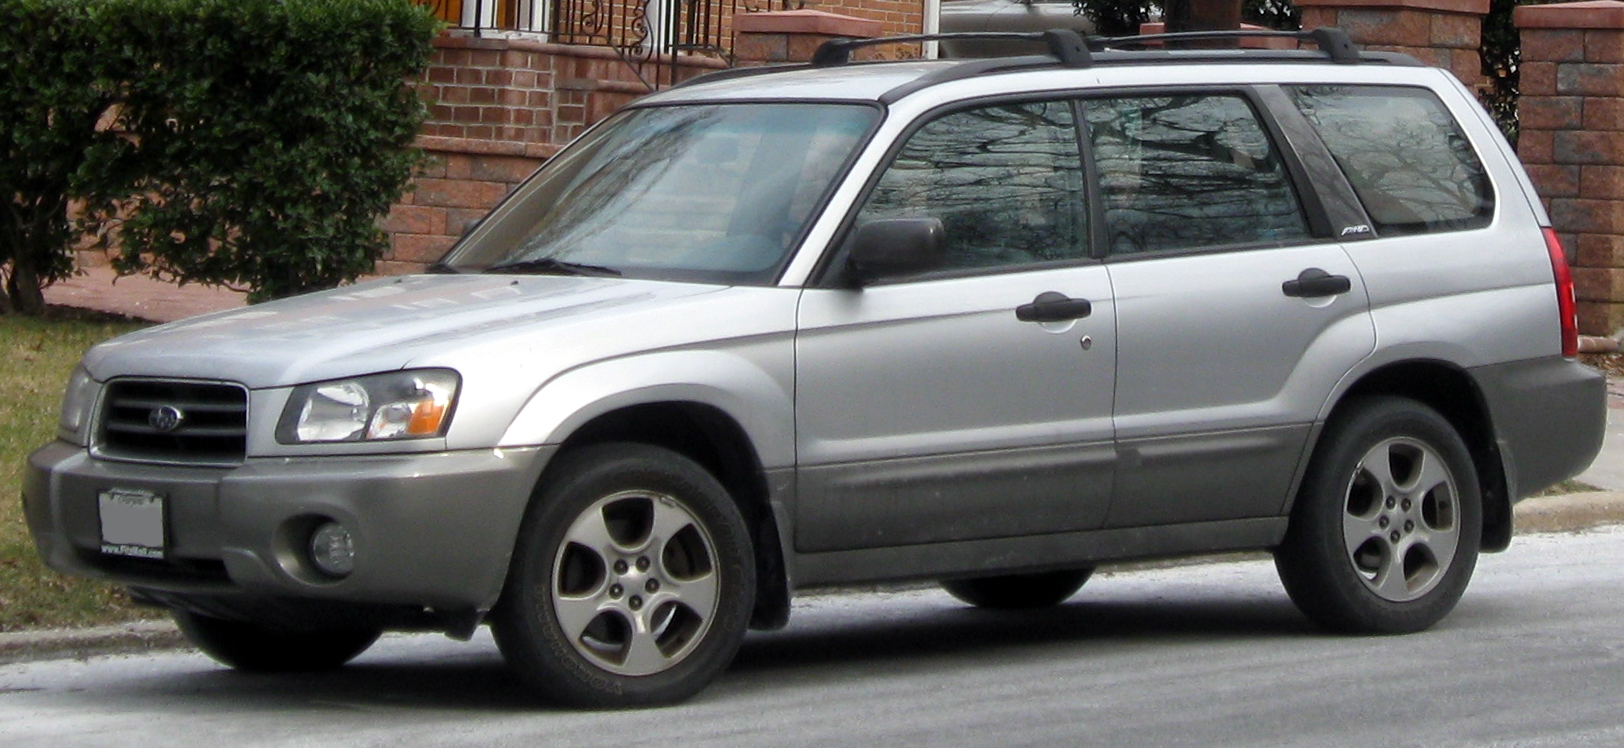 File:2003-2005 Subaru Forester -- 02-14-2012.jpg - Wikimedia Commons